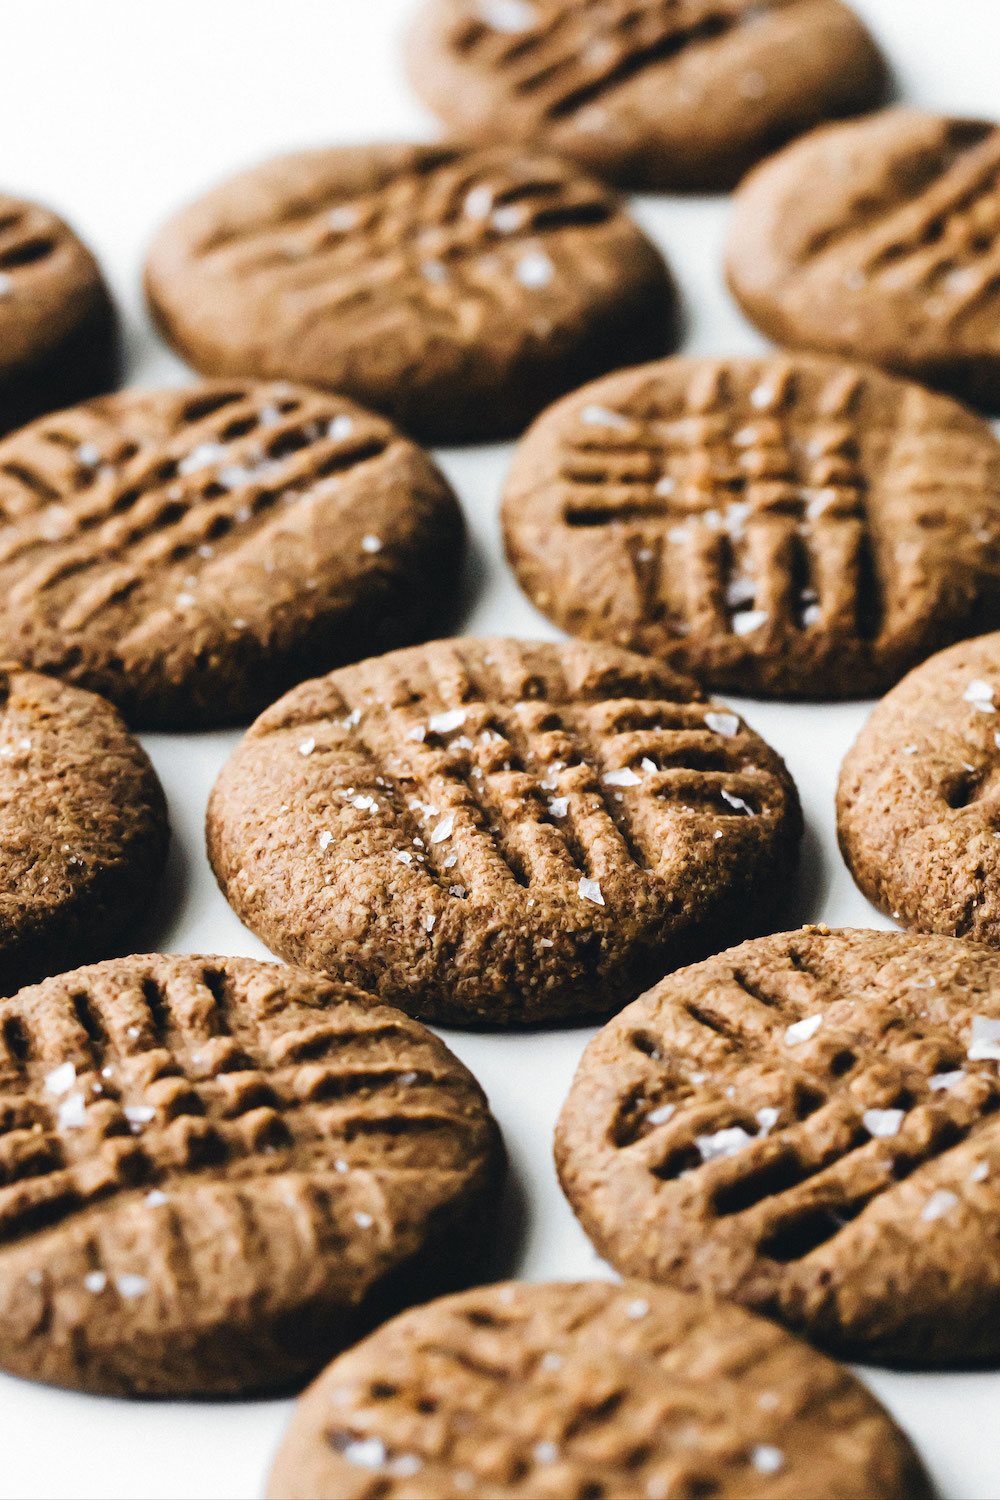 Easy Vegan Peanut Butter Cookies